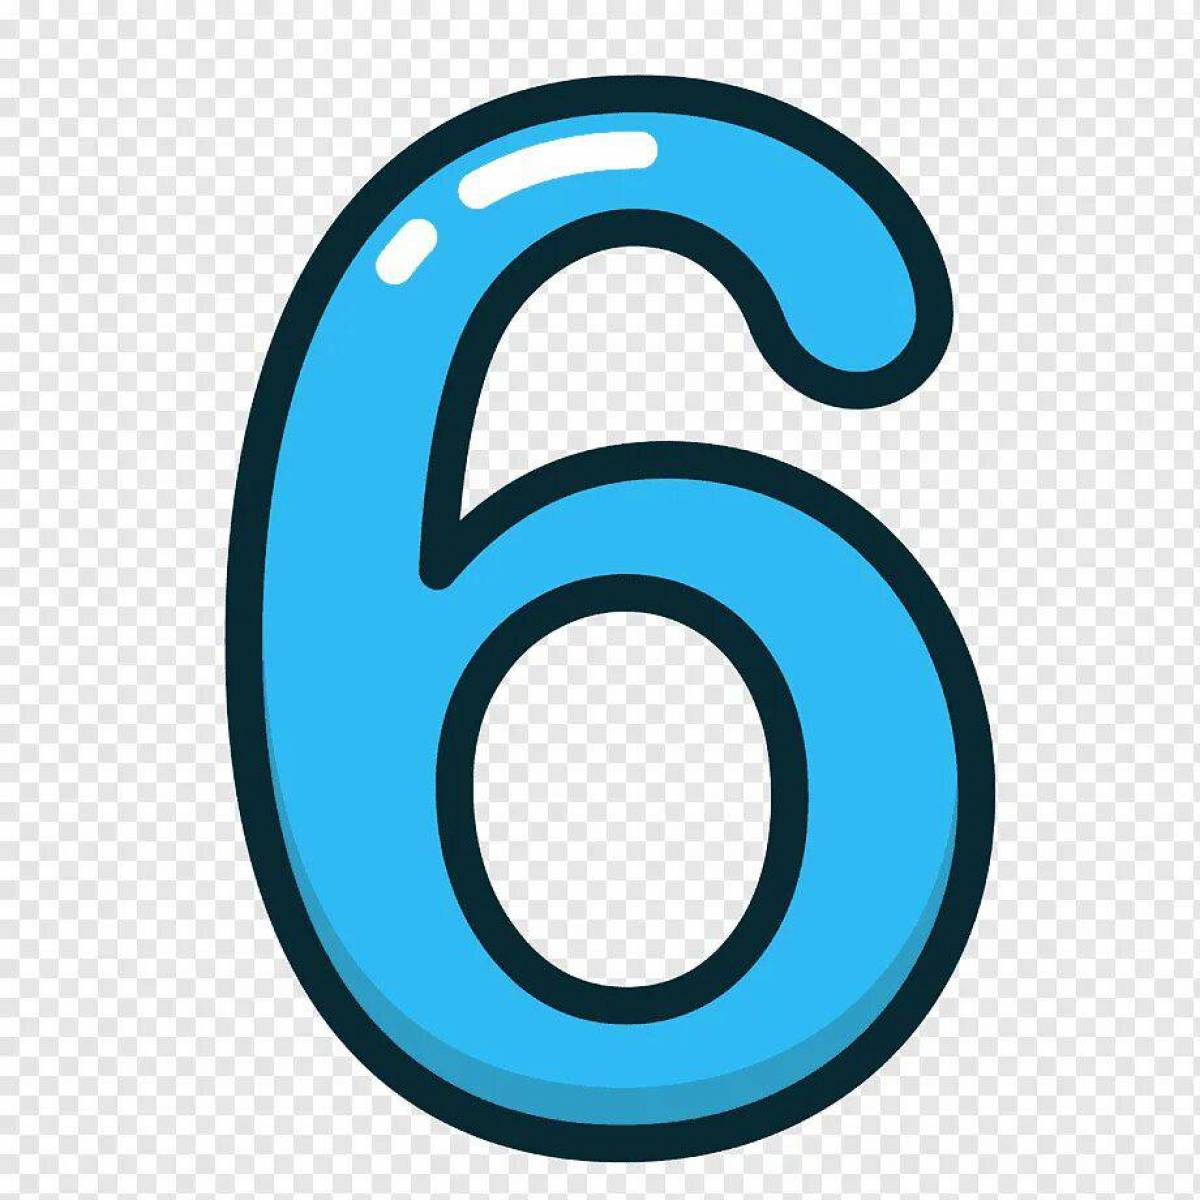 Картинка 6. Цифра 6. Цифра 6 голубая. Шесть на прозрачном фоне. Шестерка цифра.